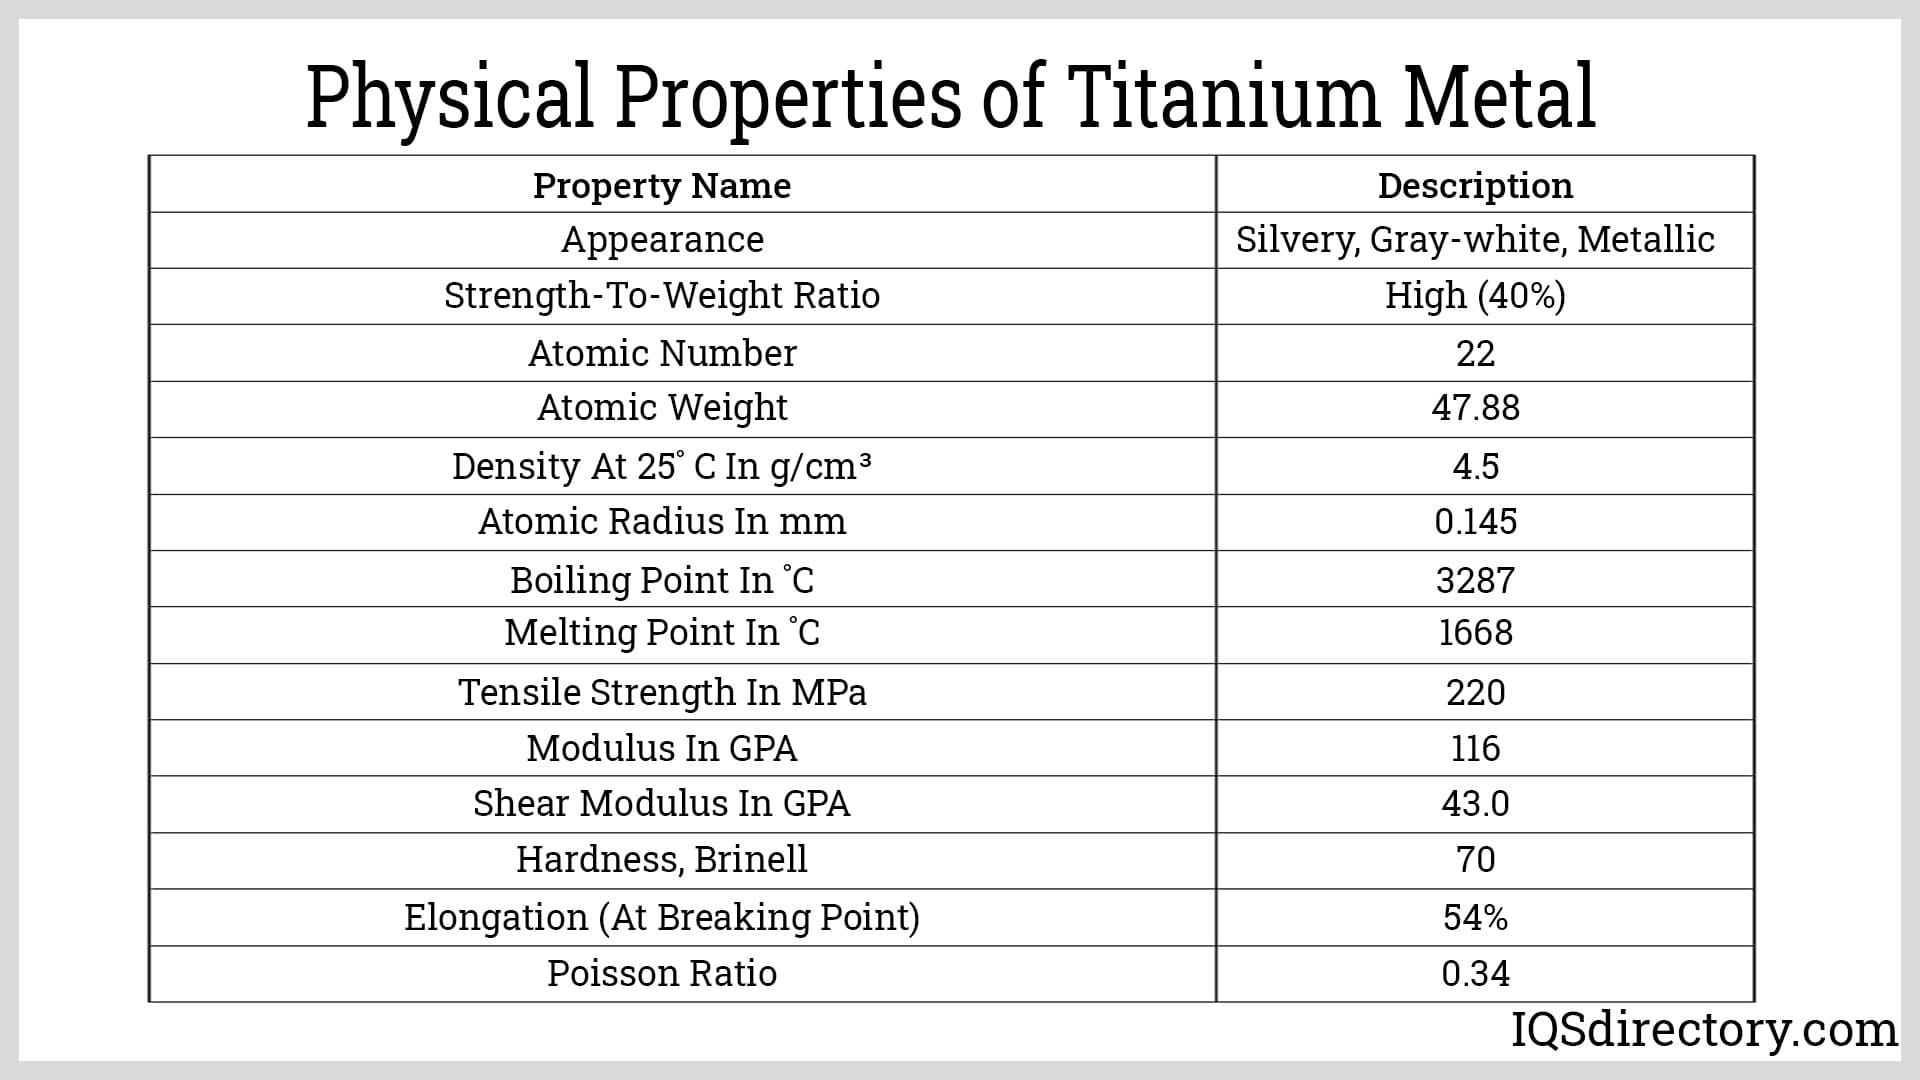 Physical Properties of Titanium Metal